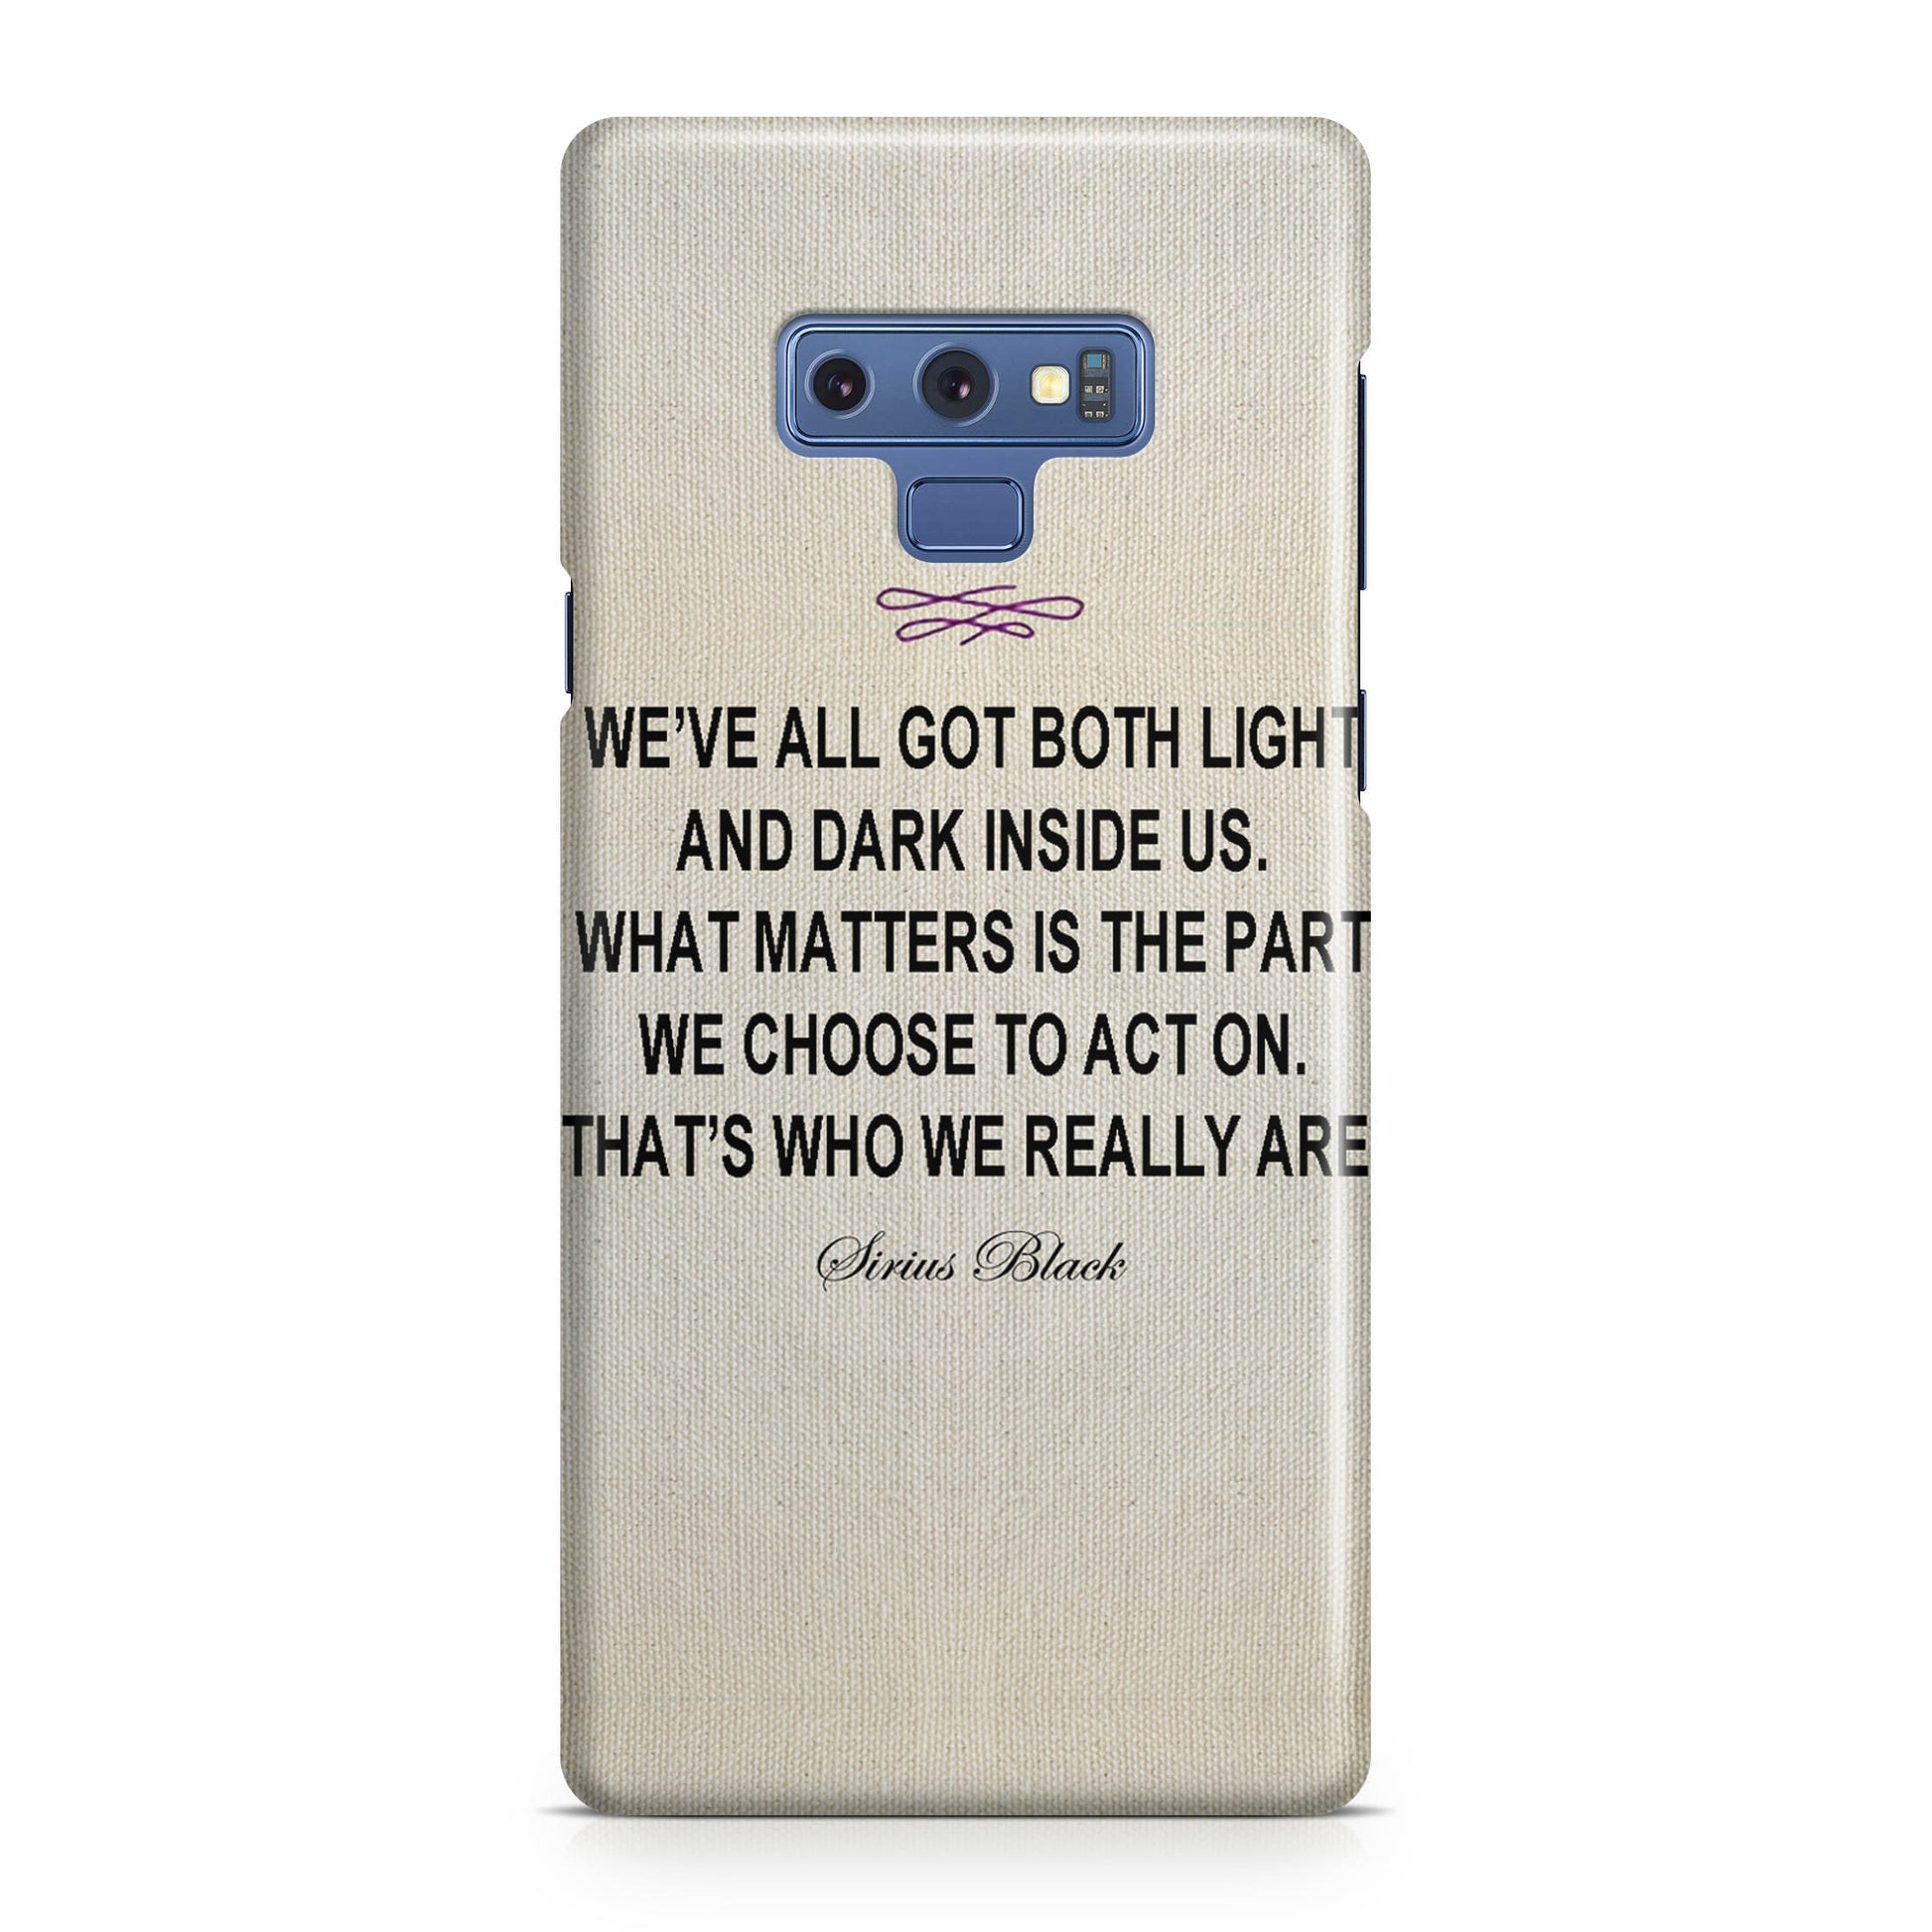 Sirius Black Quote Galaxy Note 9 Case